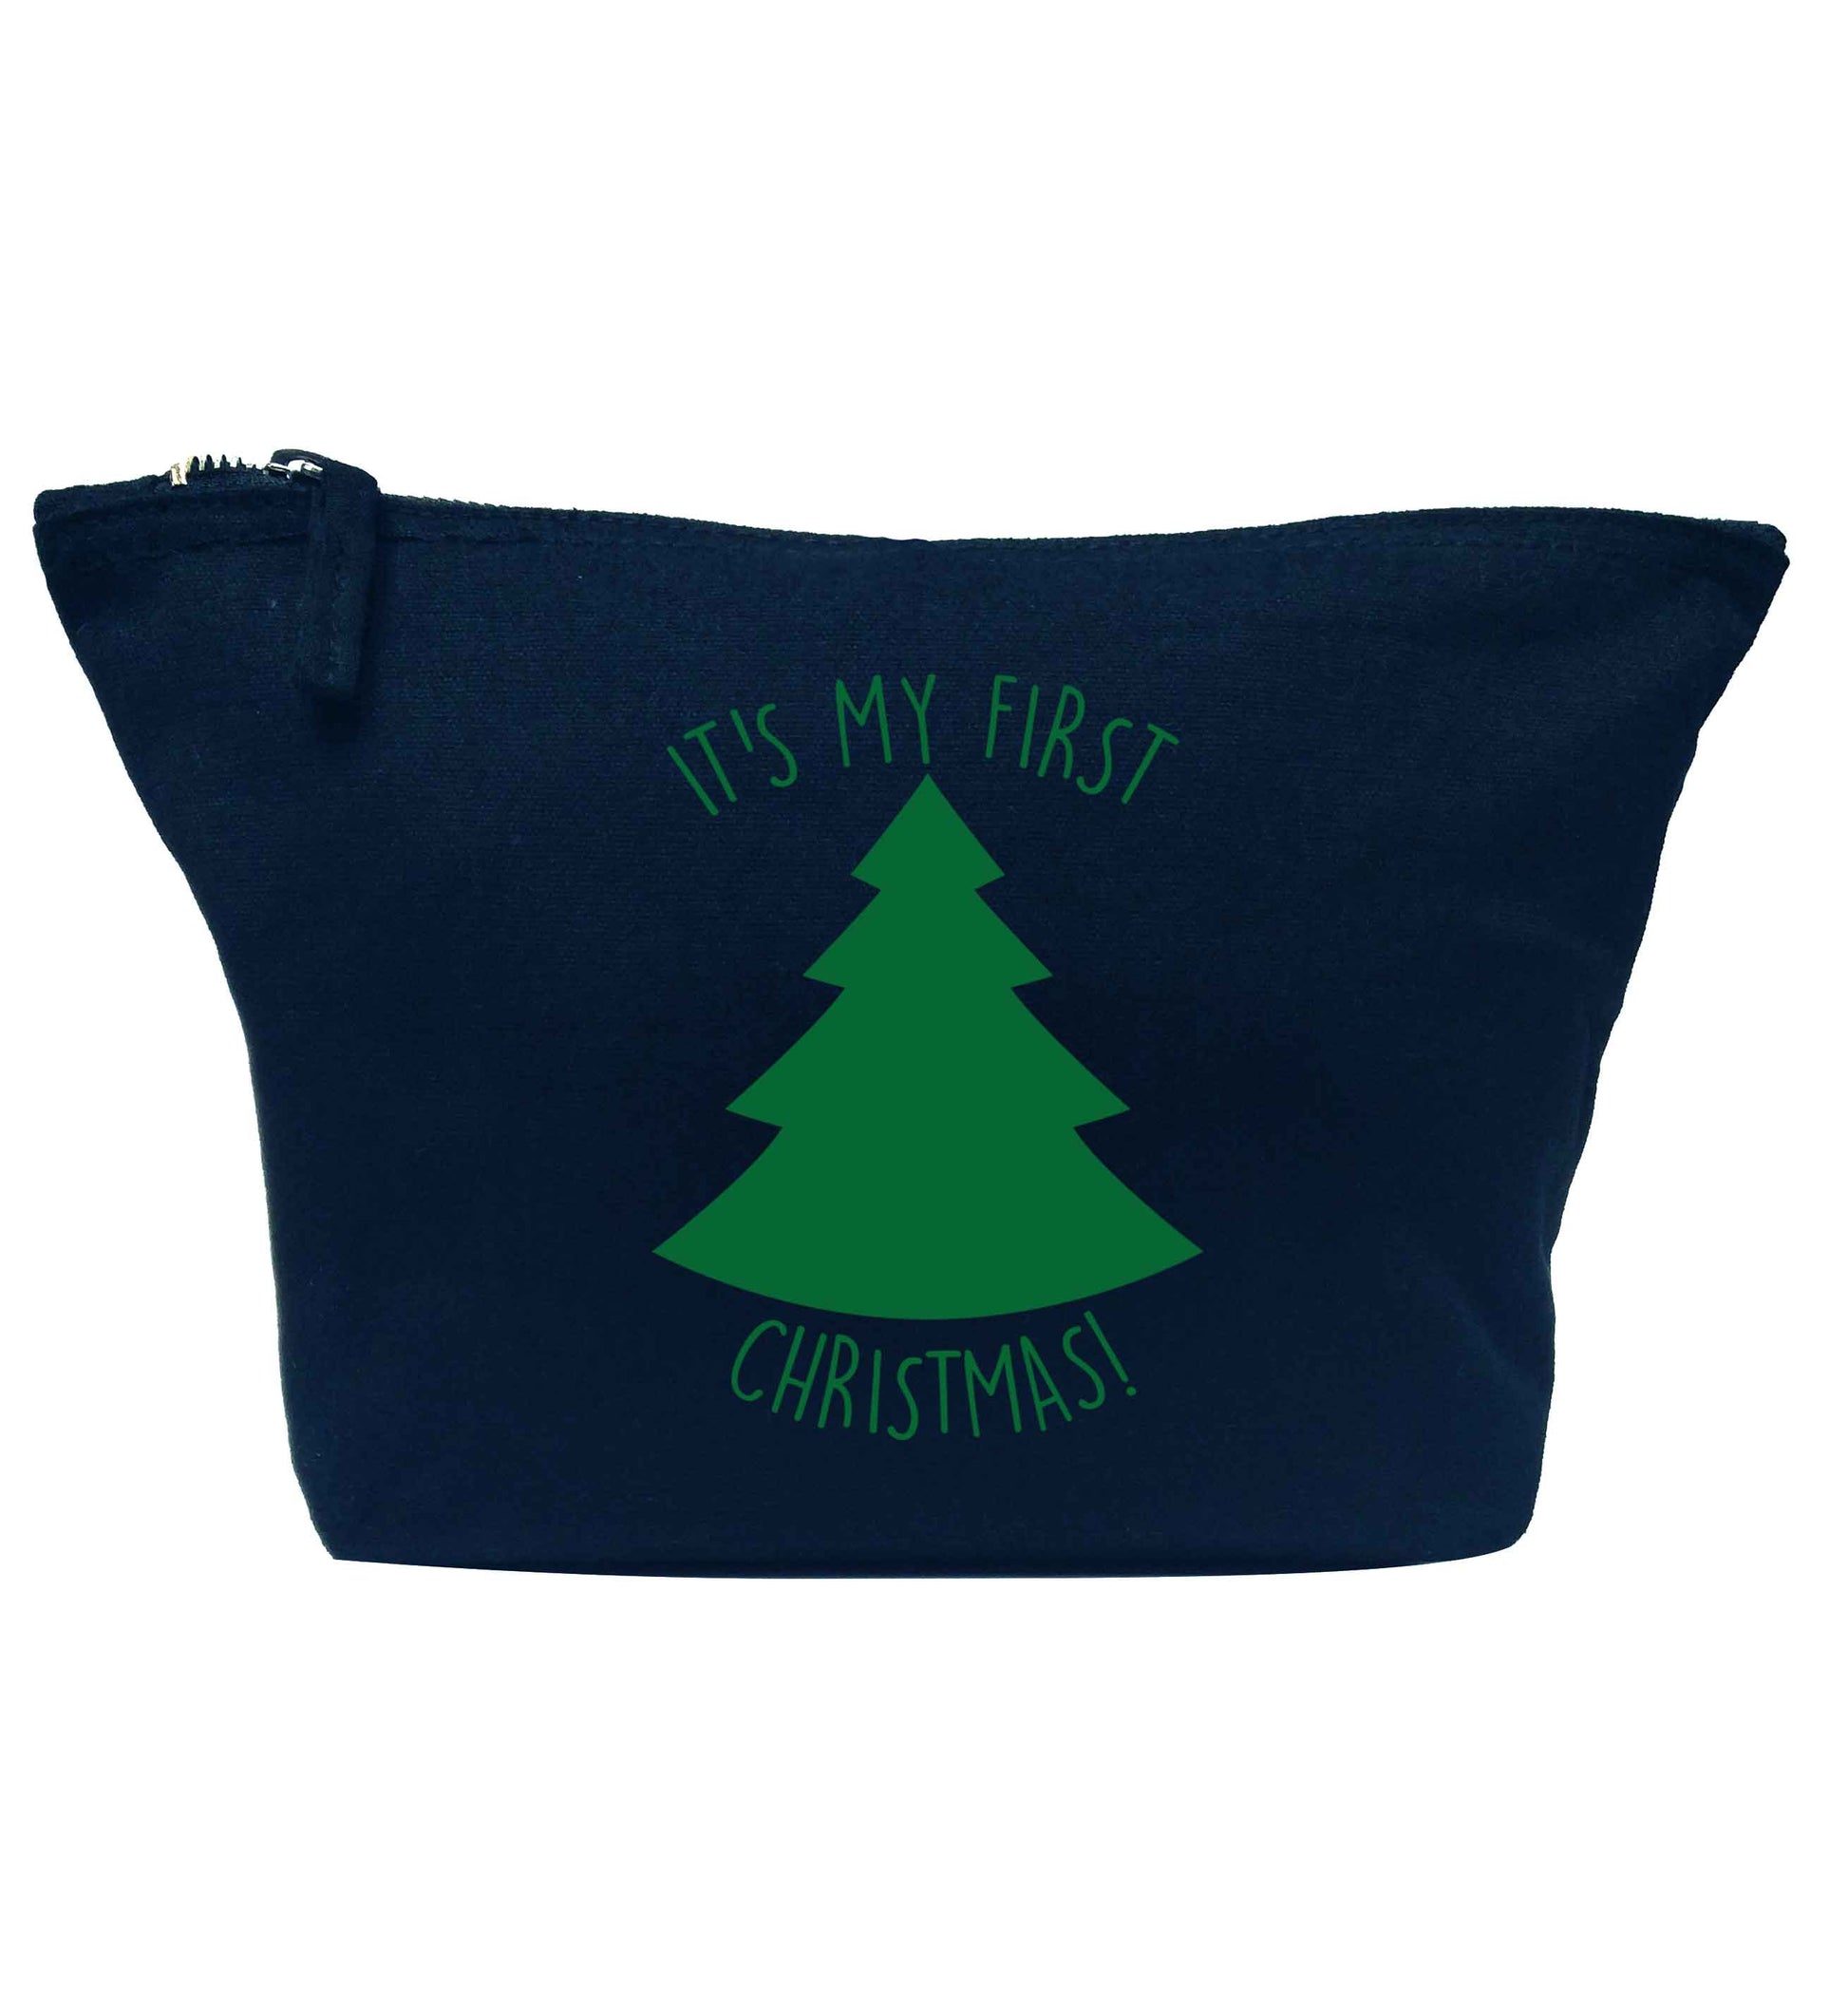 It's my first Christmas - tree navy makeup bag